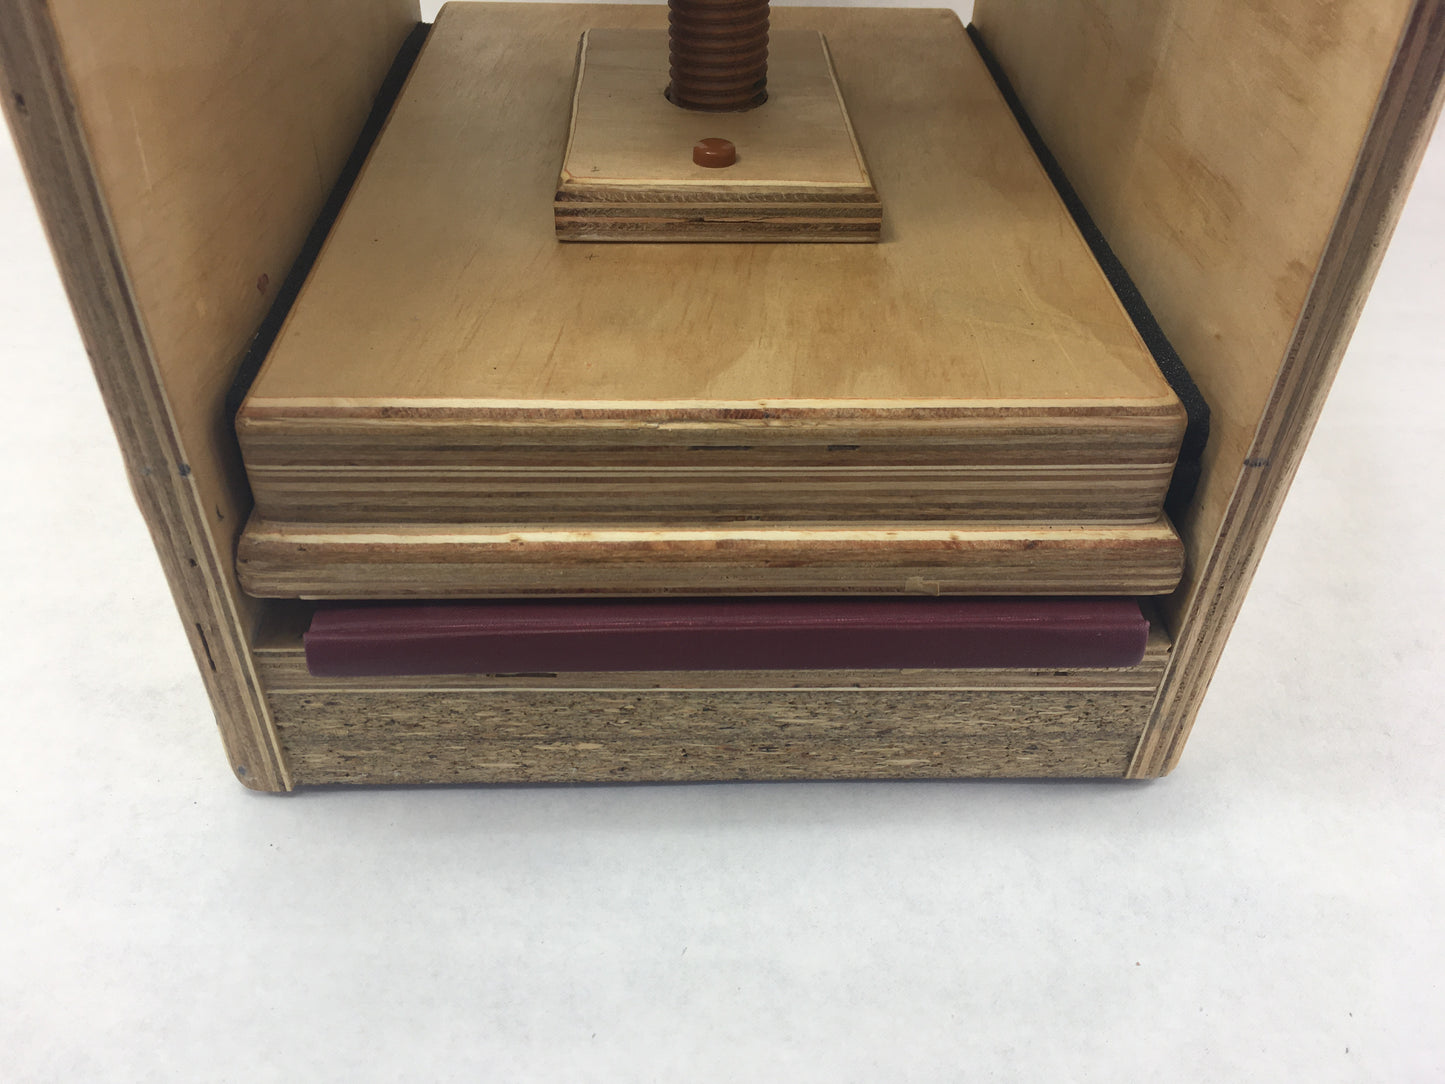 Bookbinding wooden nipping press